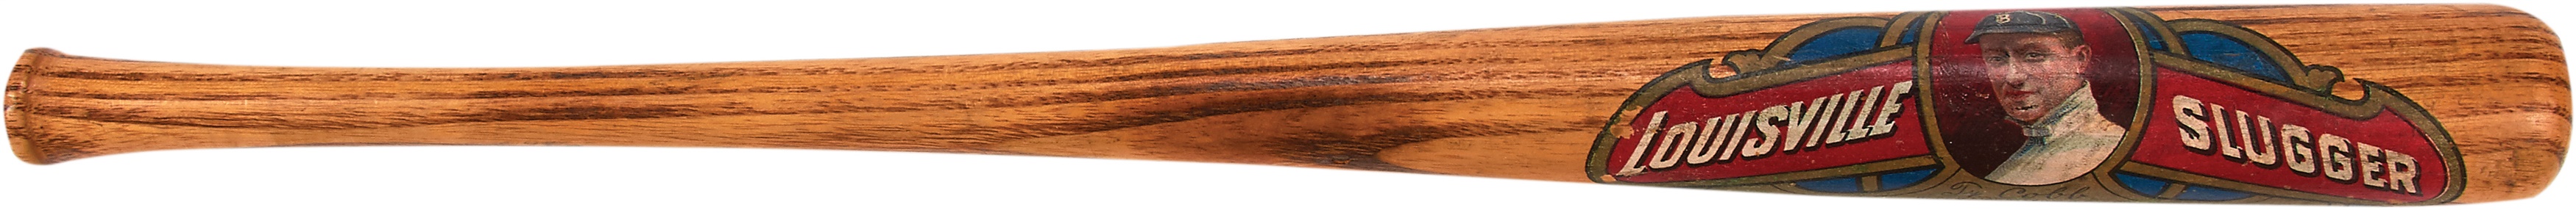 Baseball Memorabilia - High Grade Ty Cobb Decal Bat